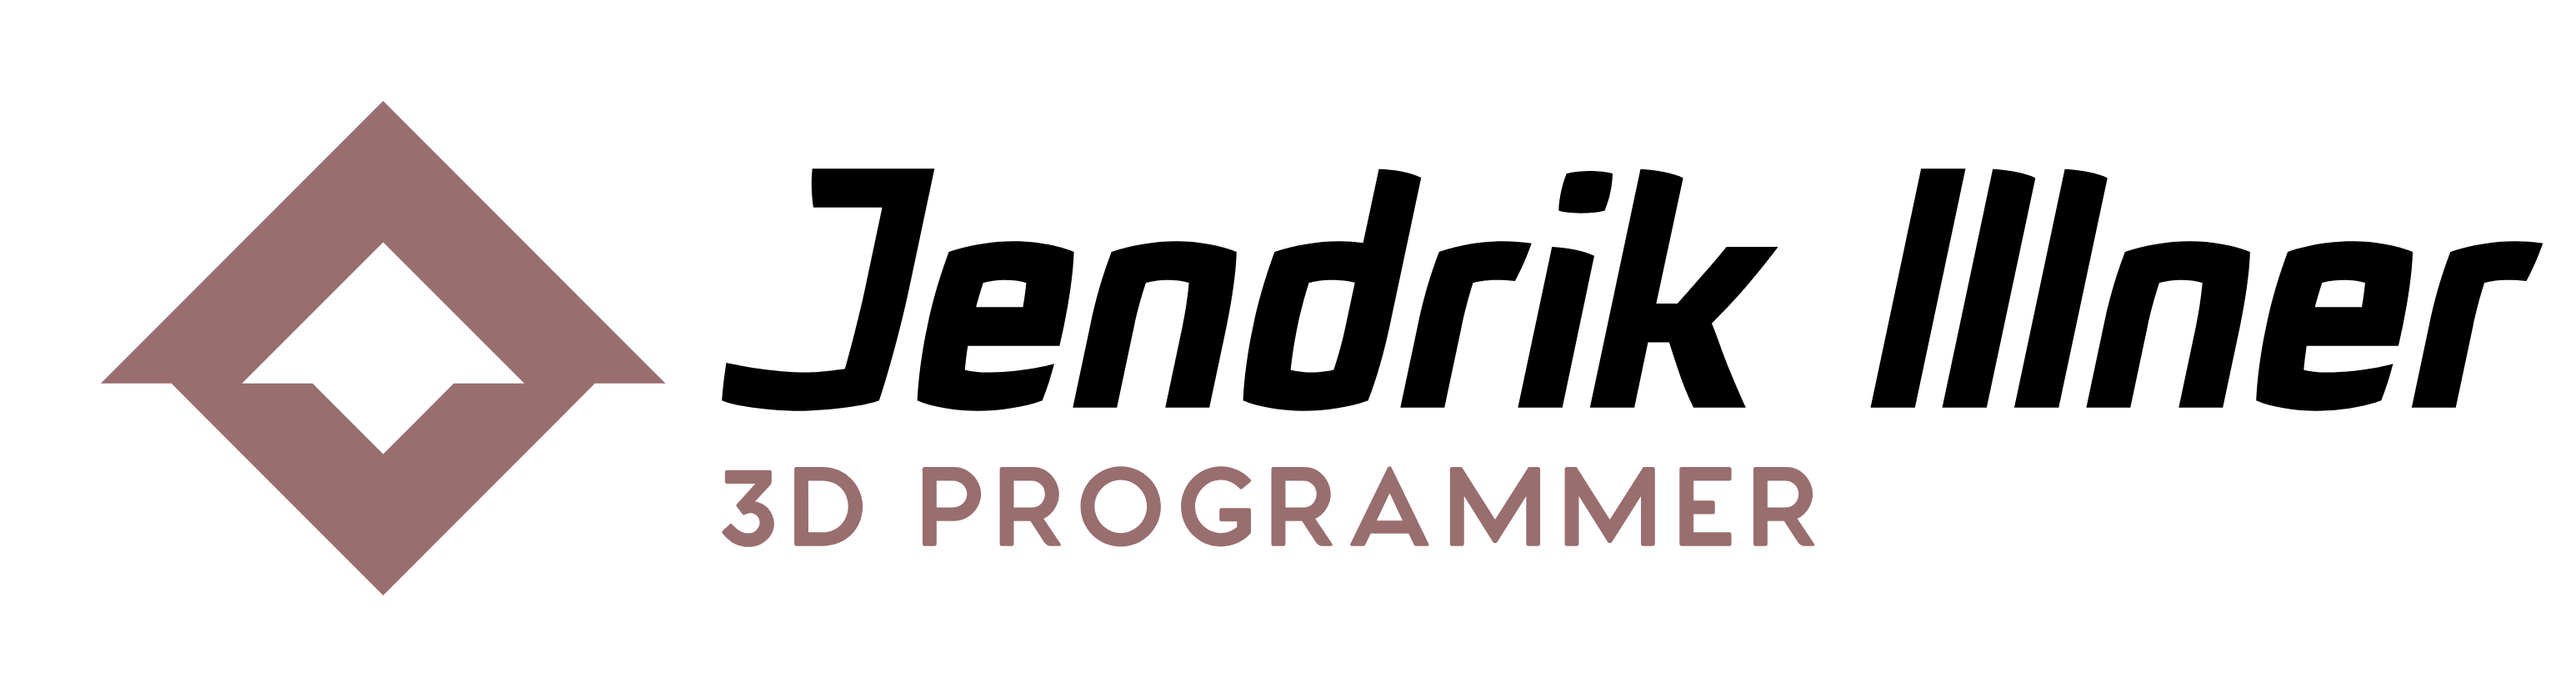 Jendrik Illner logo